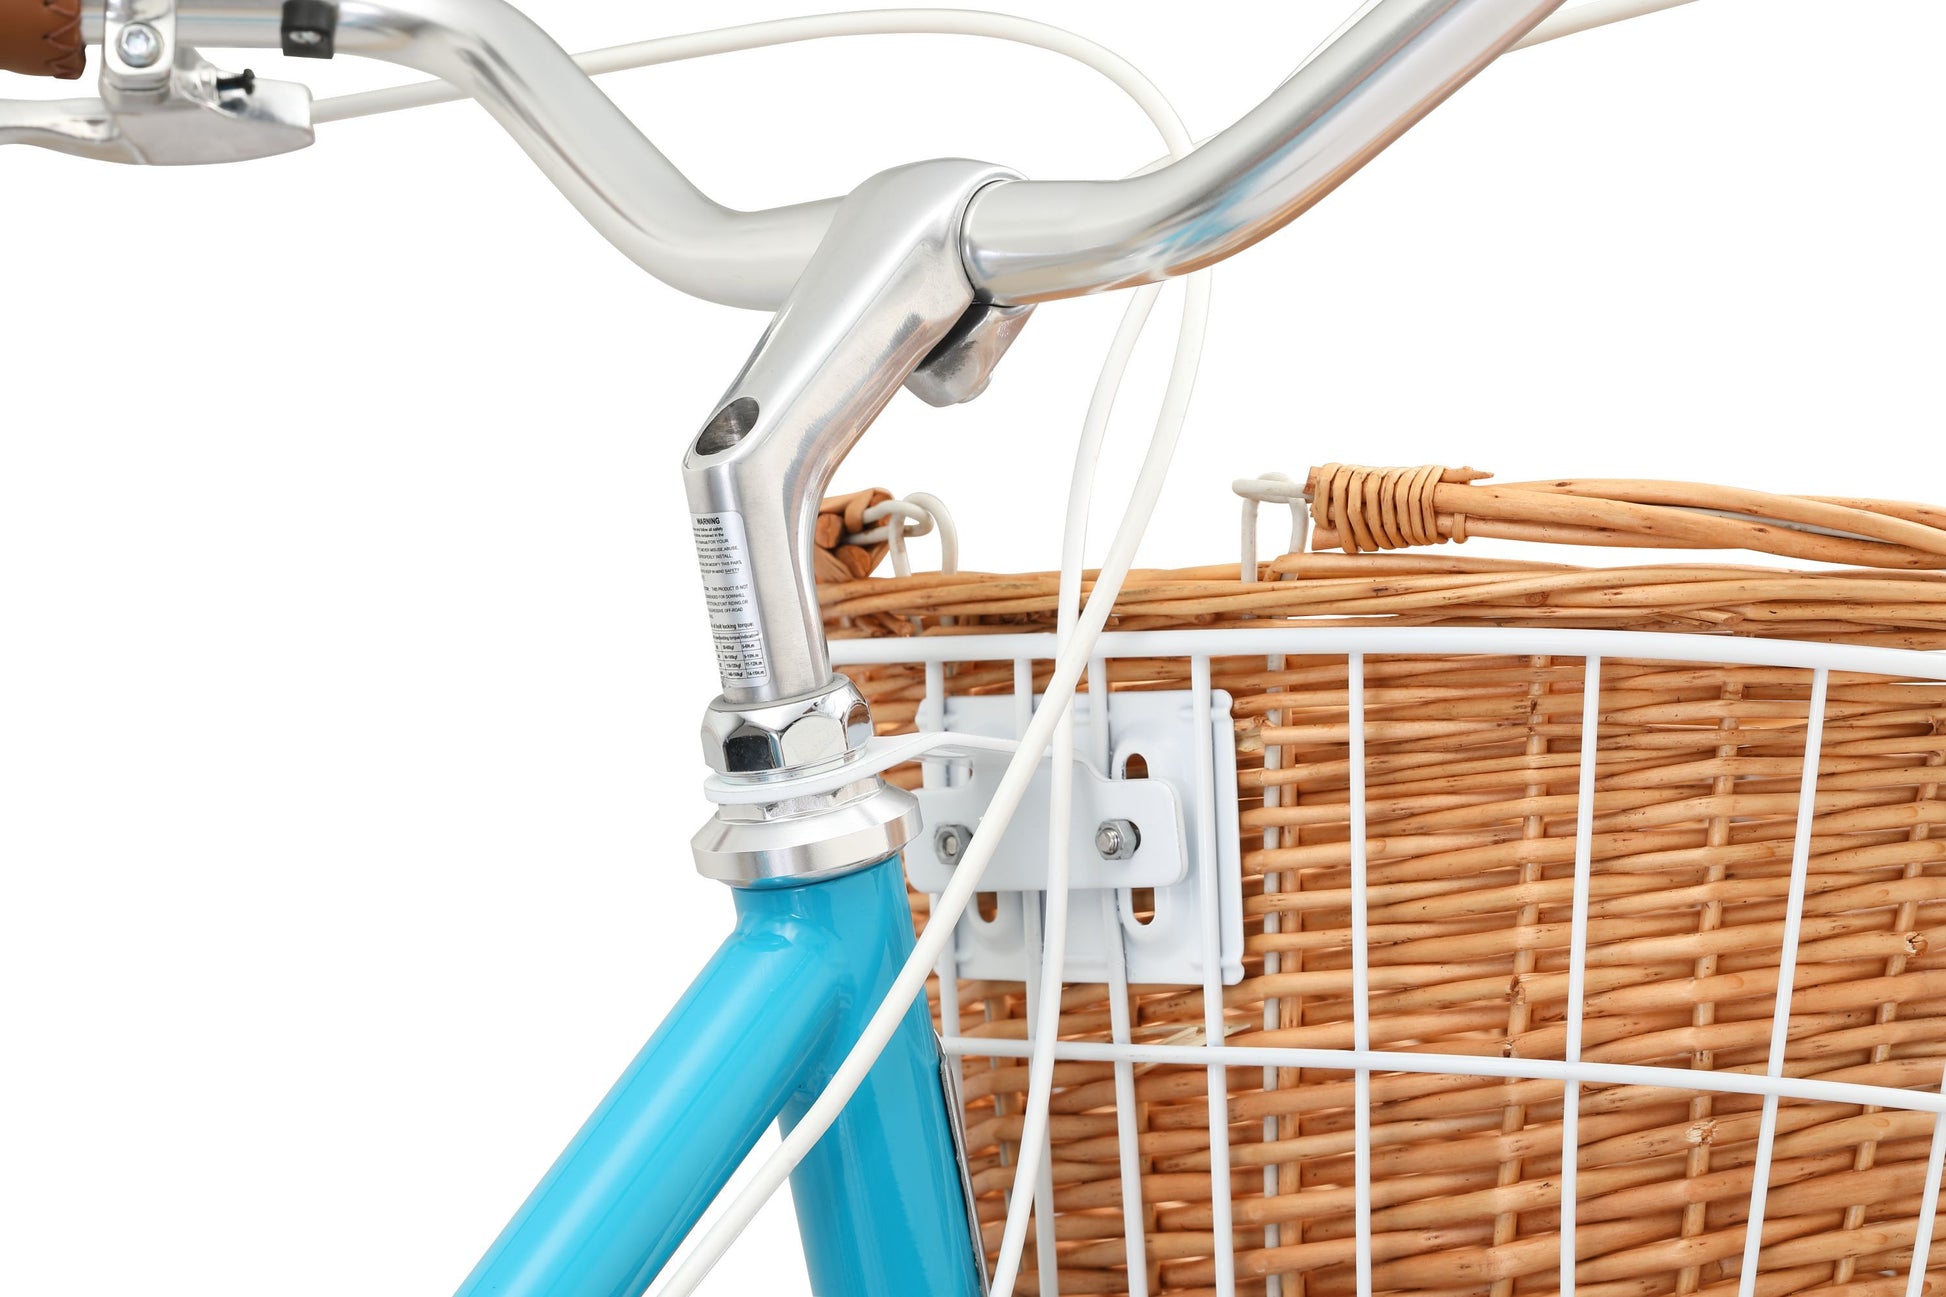 Ladies Classic Plus Vintage Bike in aqua showing metal white basket with wicker basket on inside from Reid Cycles Australia